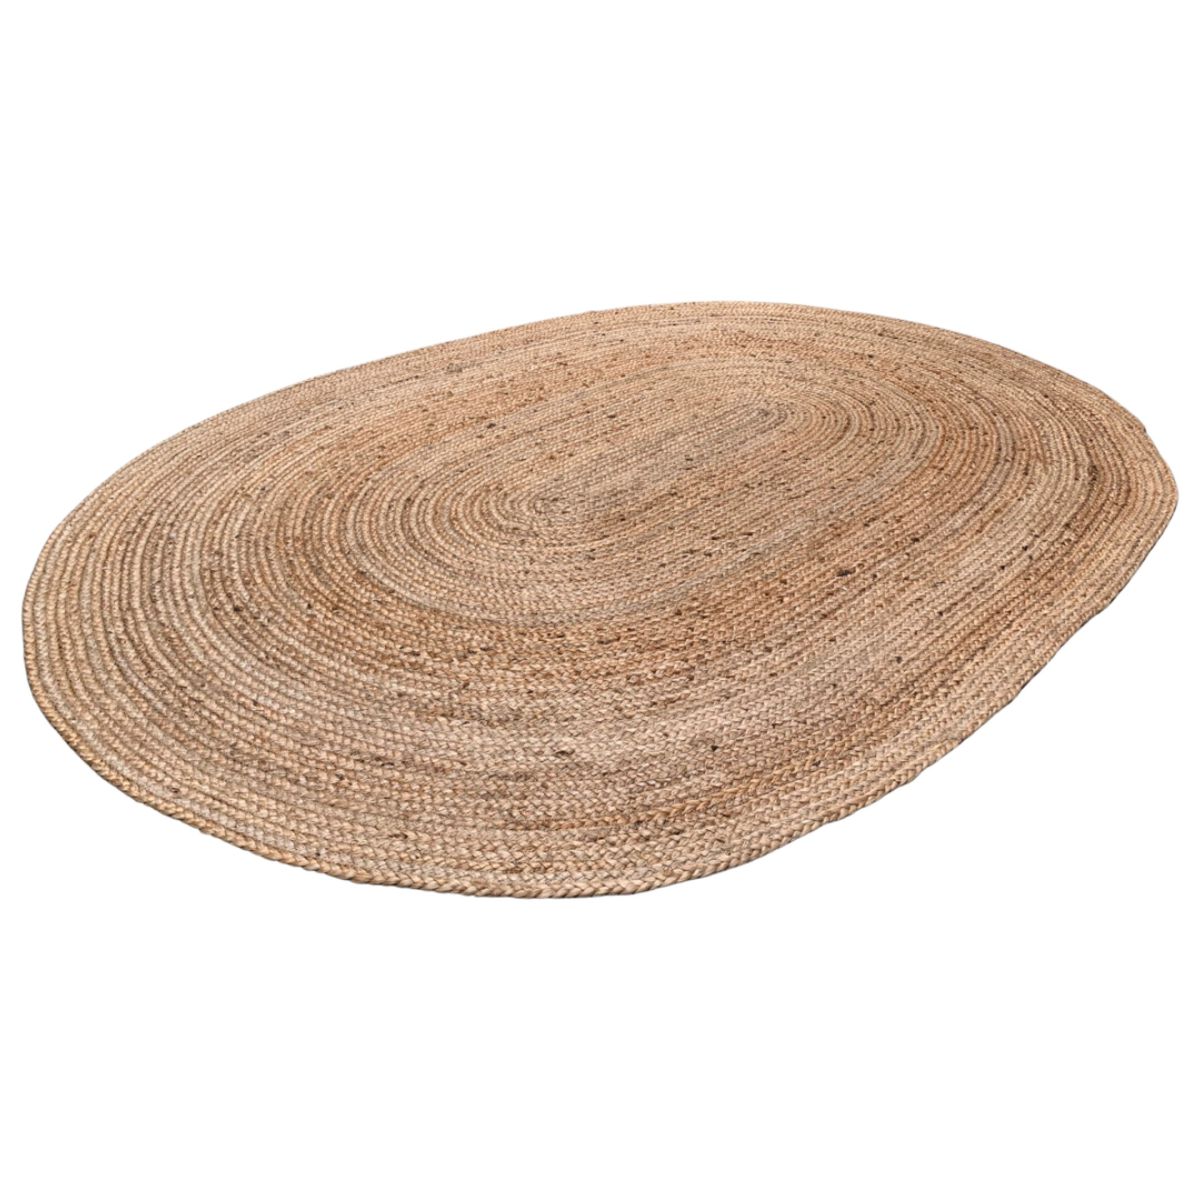 rug jute oval 140x200cm natural brown